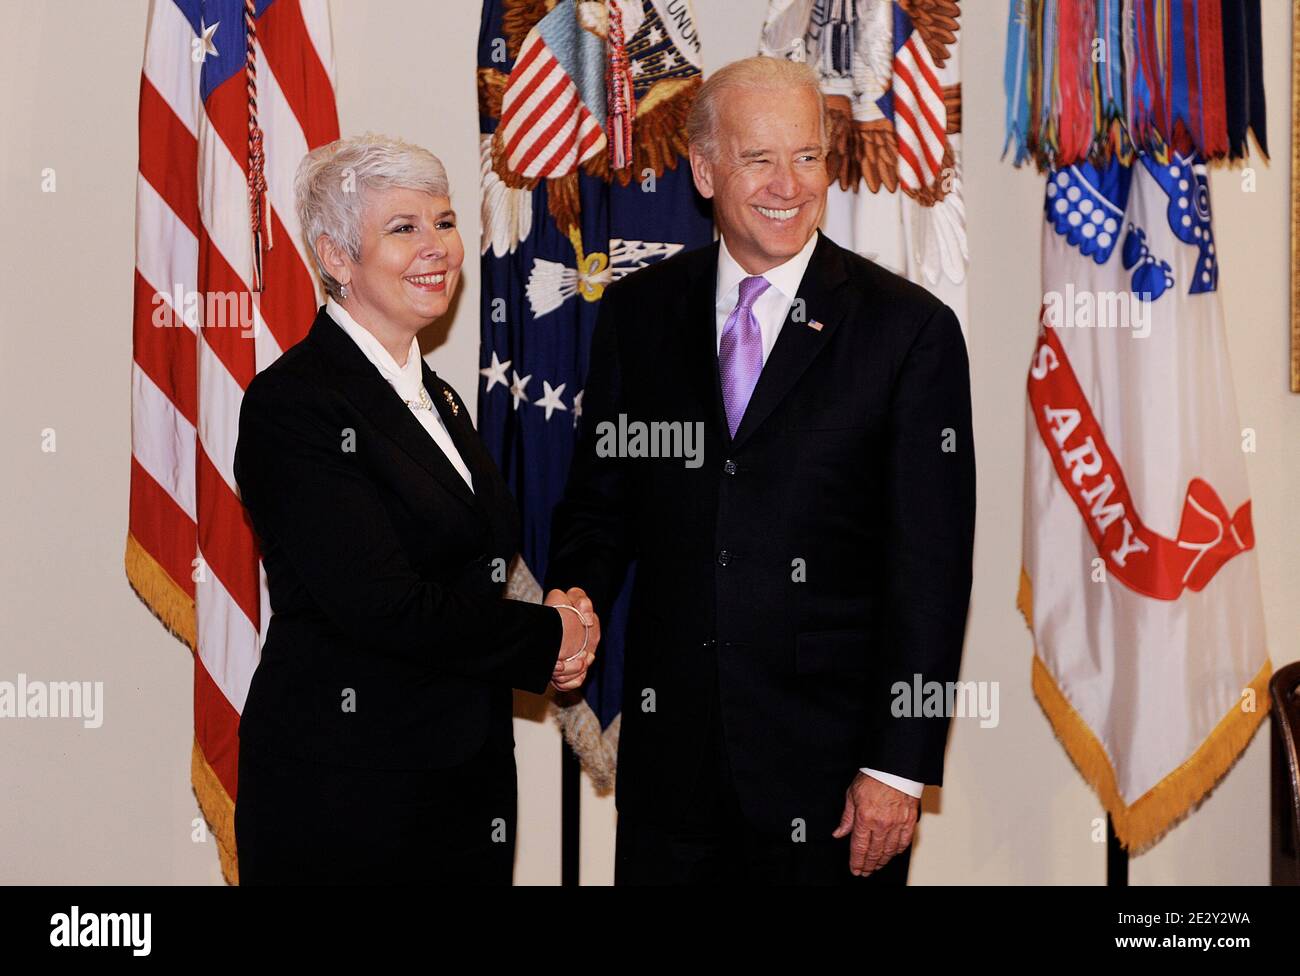 Vice-President Joe Biden meets with Prime Minister of Croatia Jadranka Kosor in the Roosevelt Room in Washington, DC, USA, May 25, 2010. Photo by Olivier Douliery/ABACAPRESS.COM Stock Photo